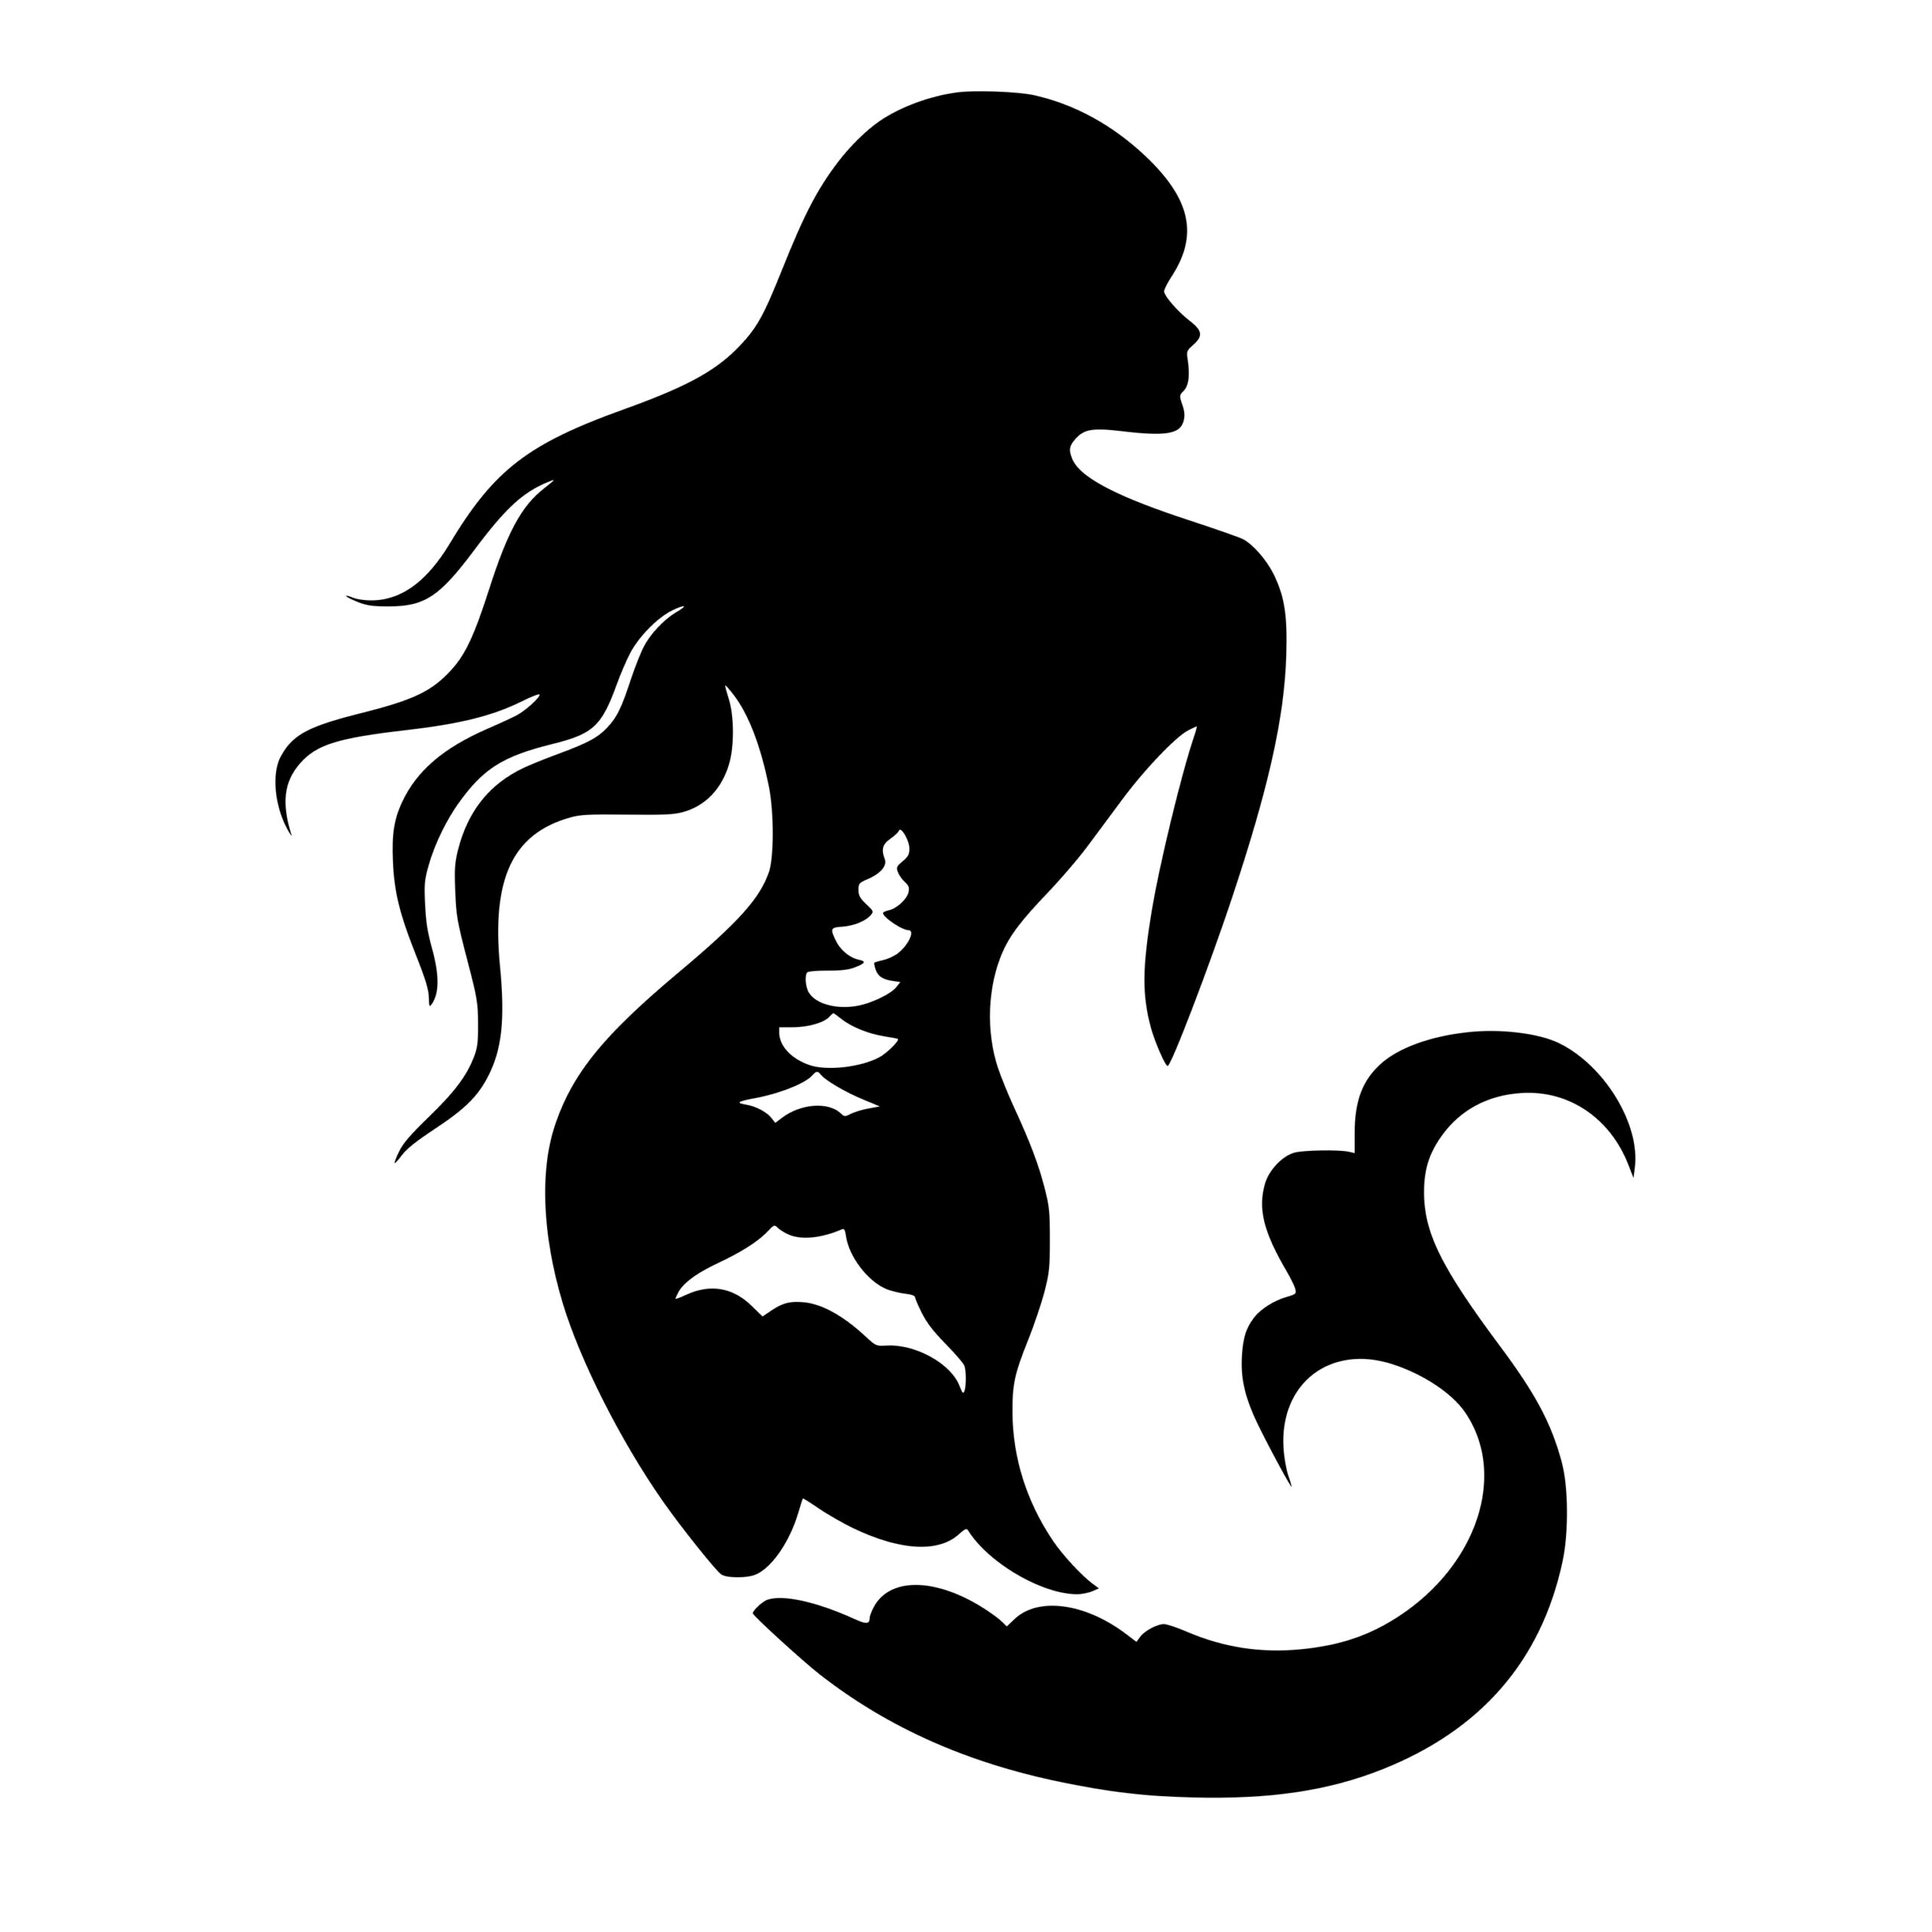 Enchanting Mermaid SVG Image for Cricut, Silhouette, Laser Machines